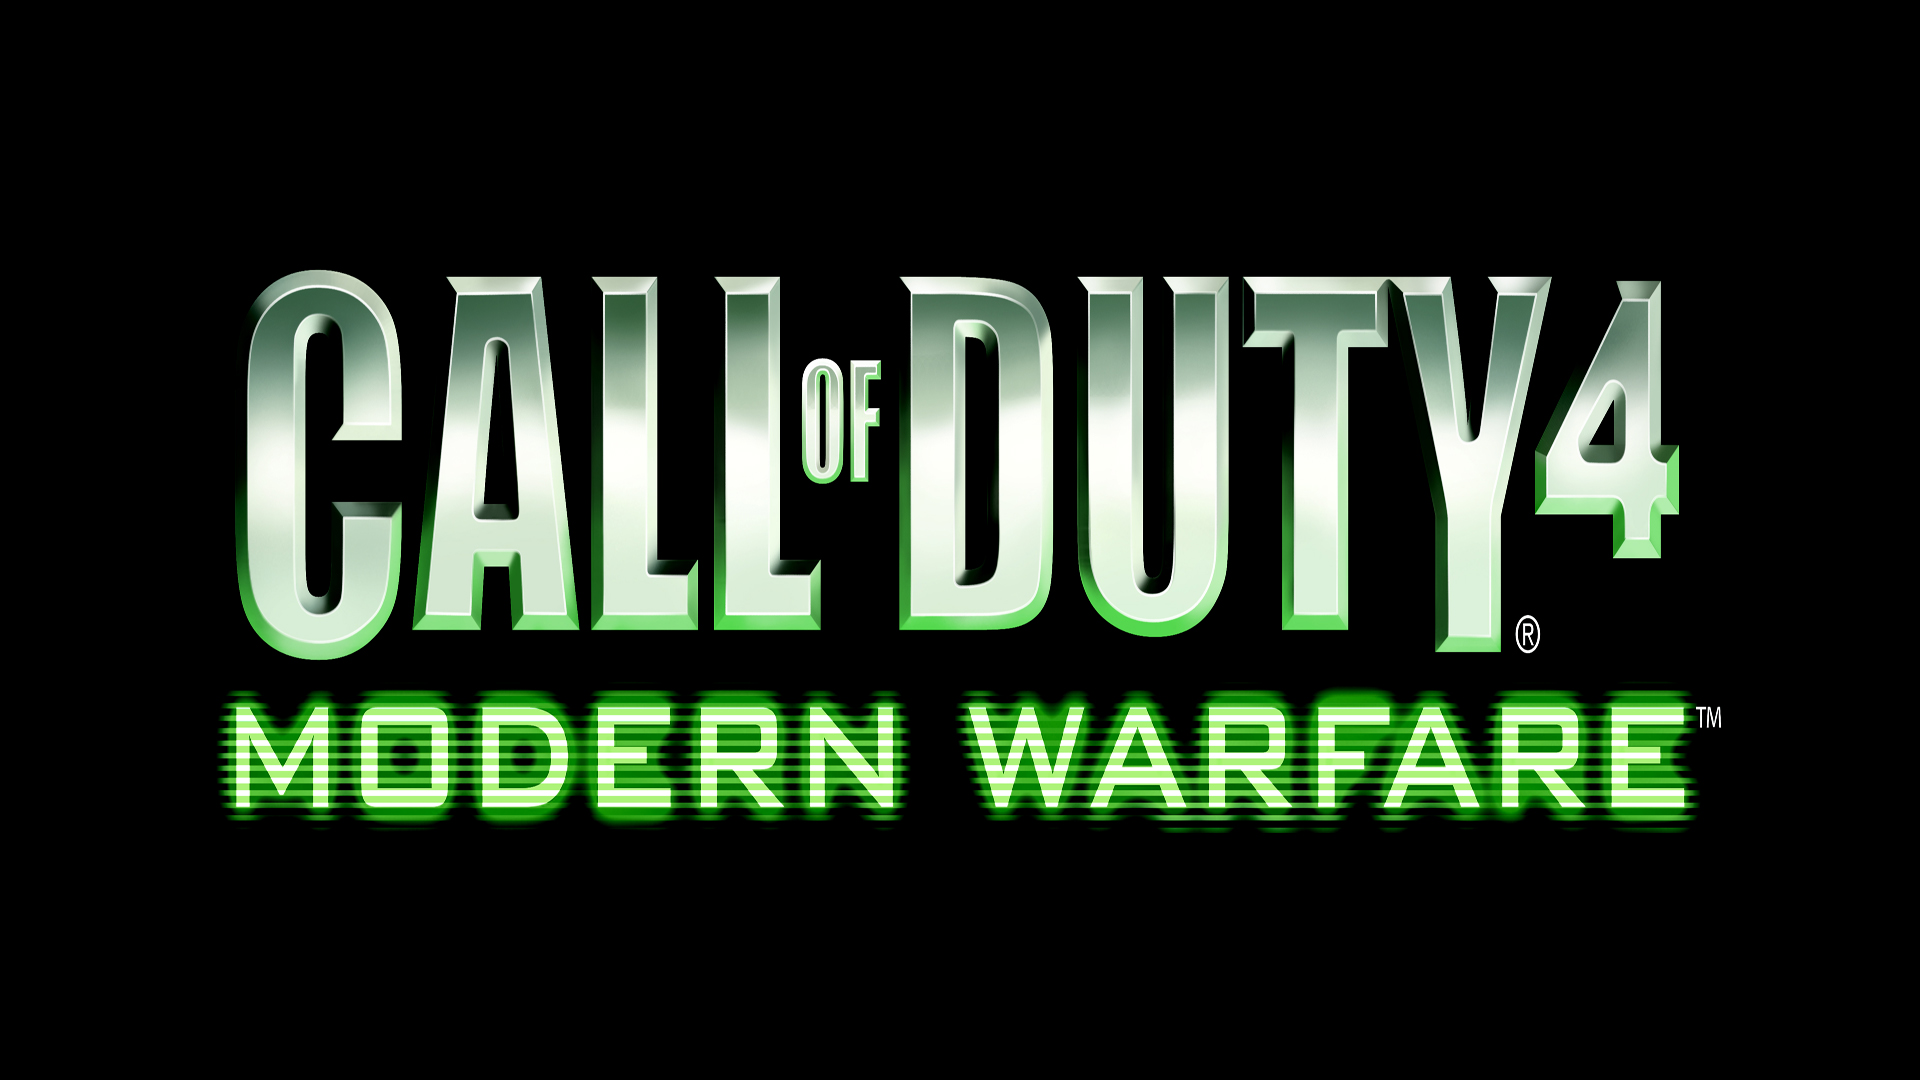 video game, call of duty 4: modern warfare, call of duty